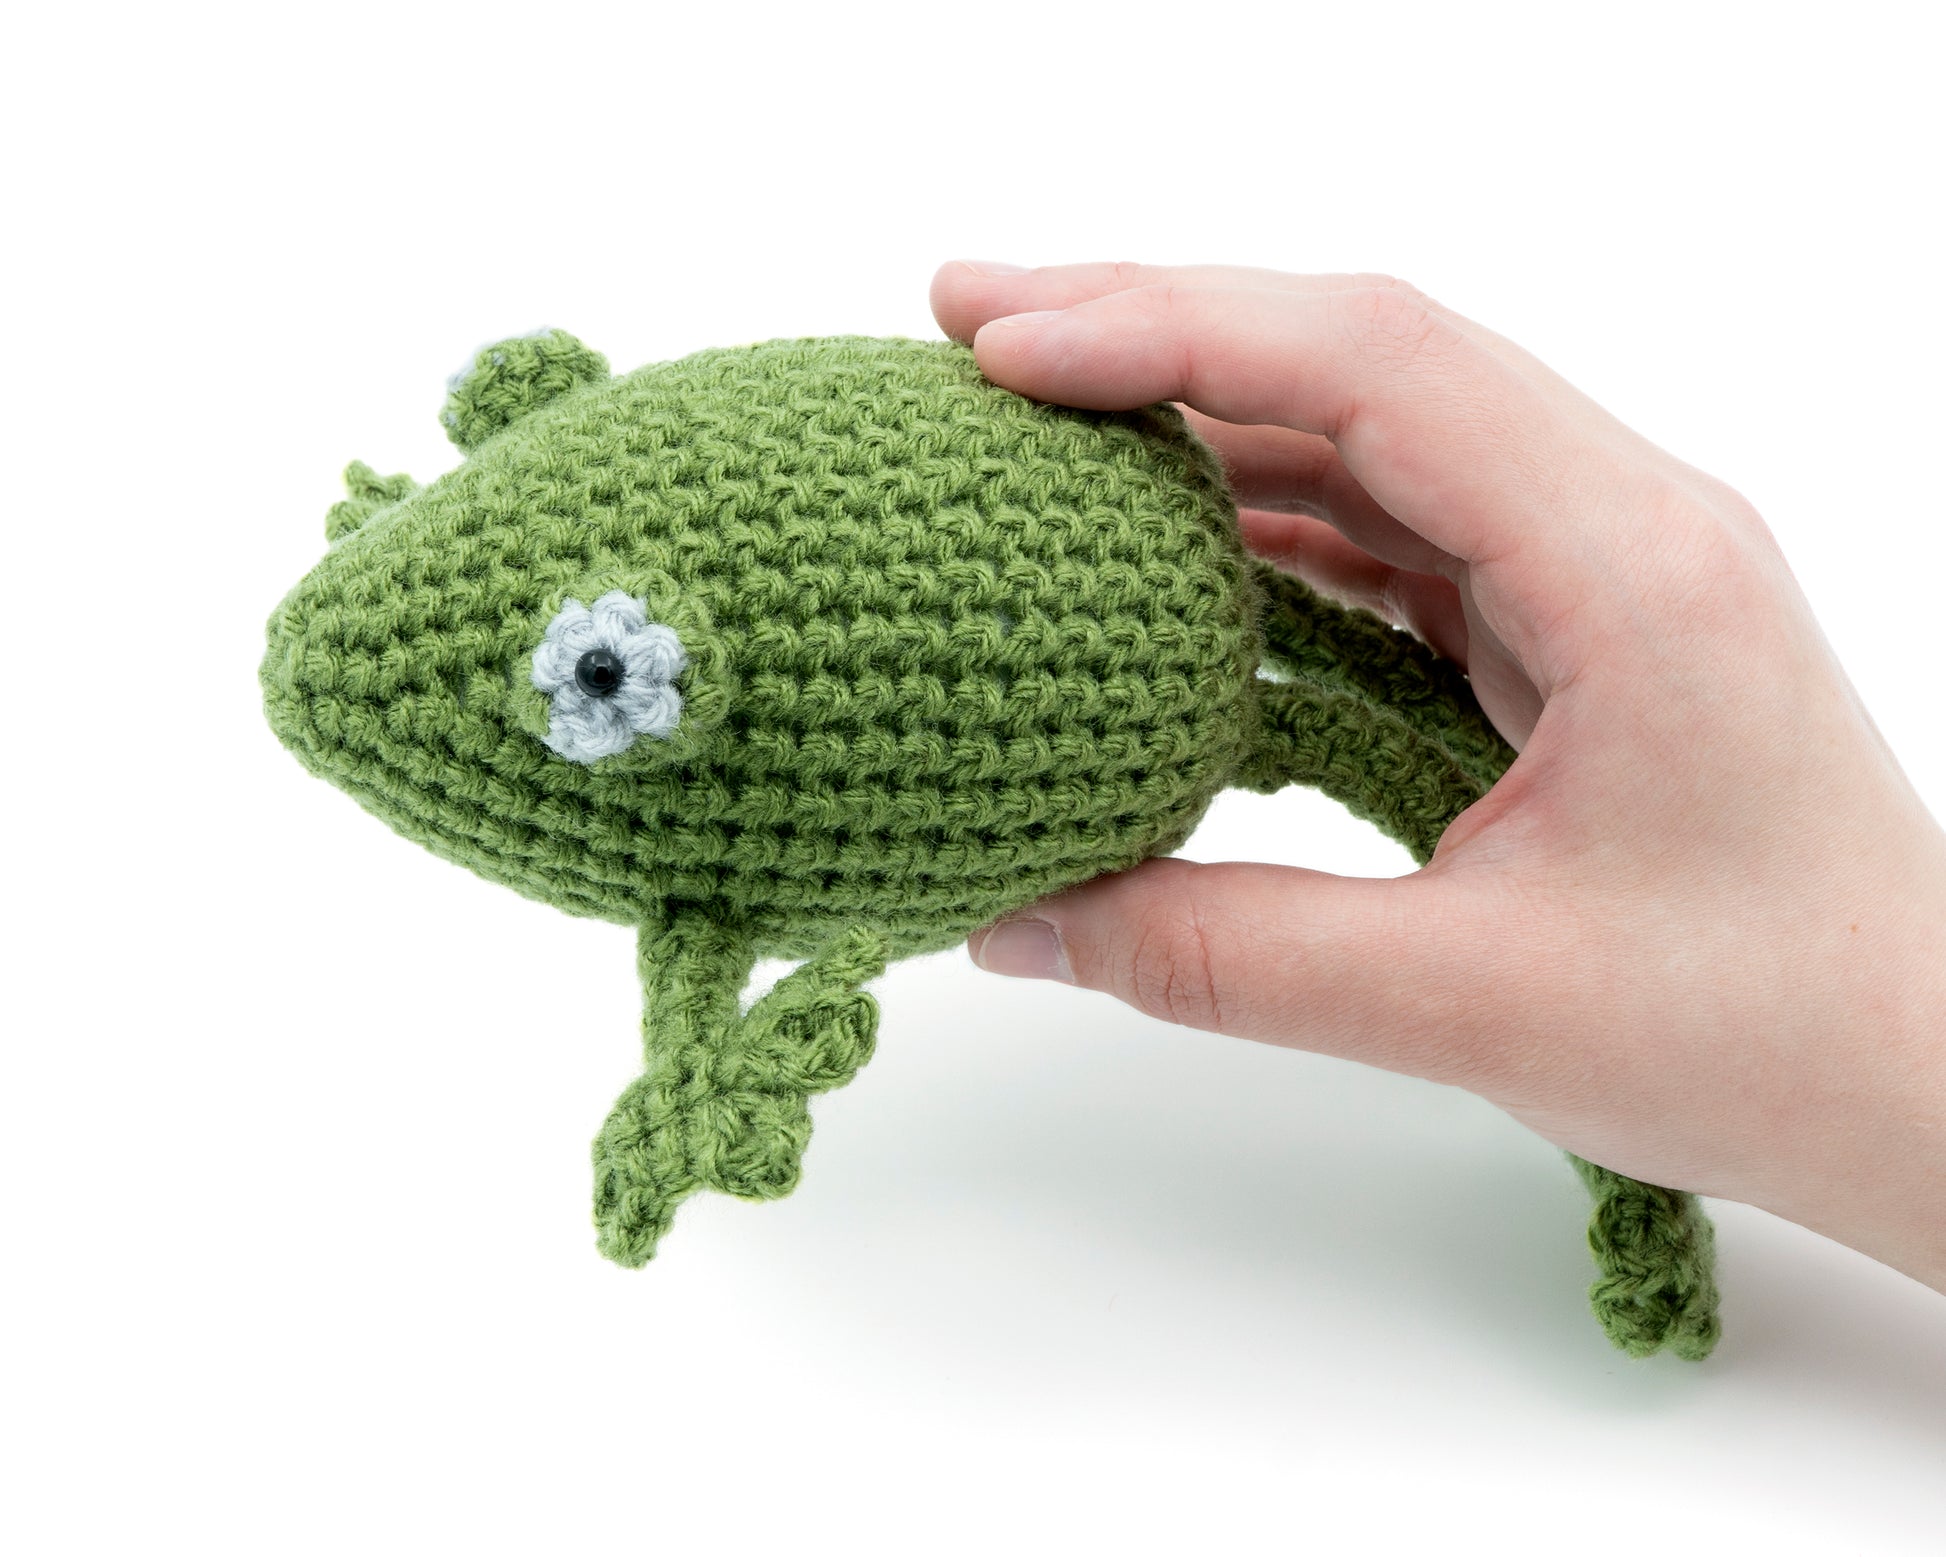 amigurumi crochet frog pattern in hand for size comparison